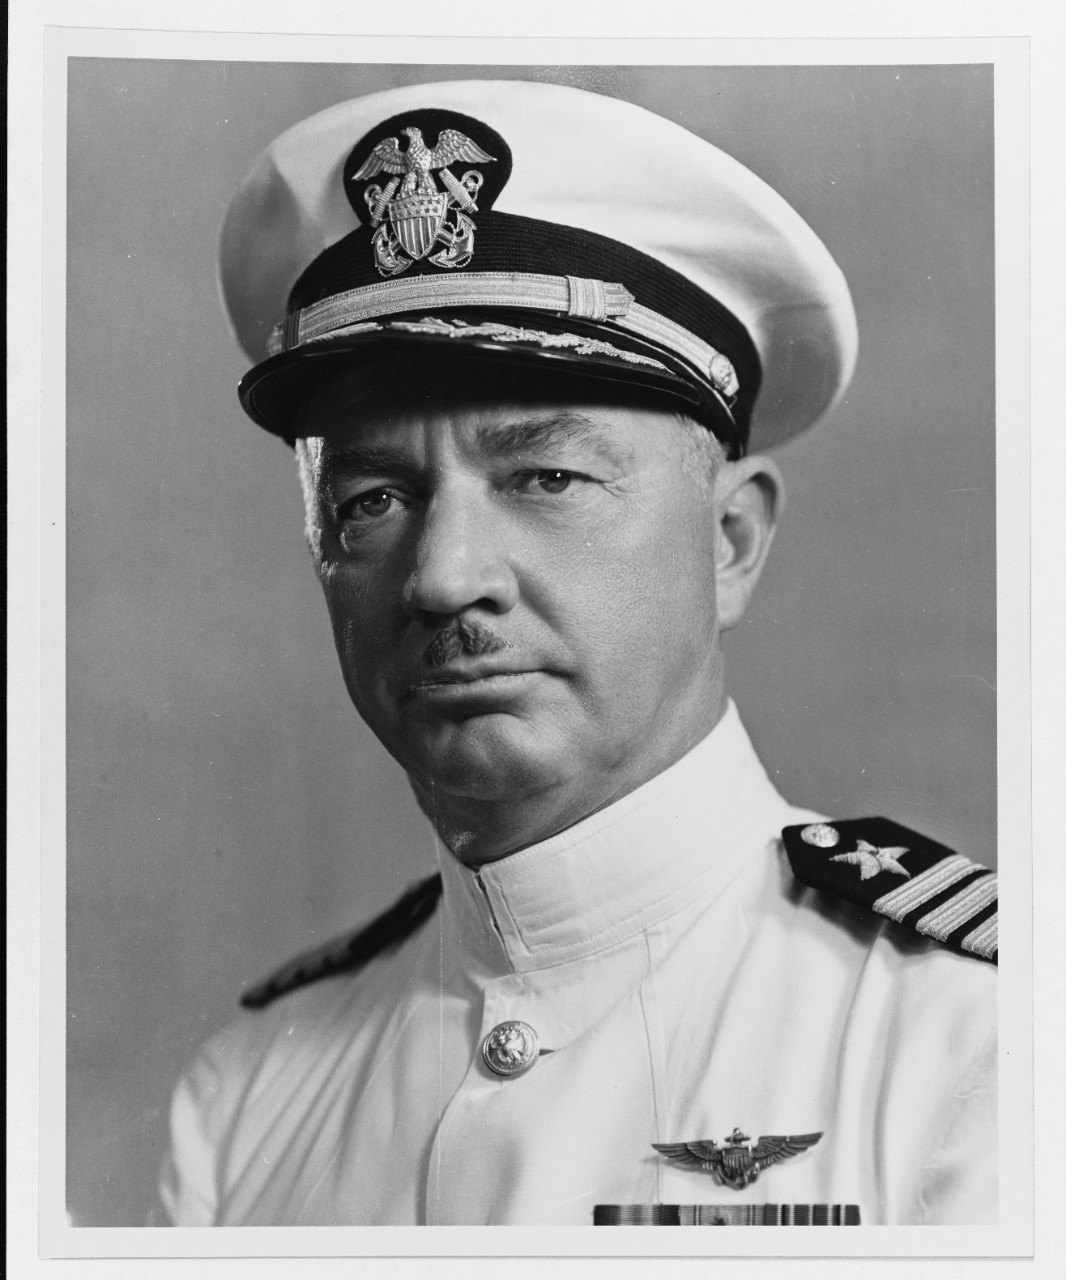 Captain Arthur Gavin, U.S. Navy